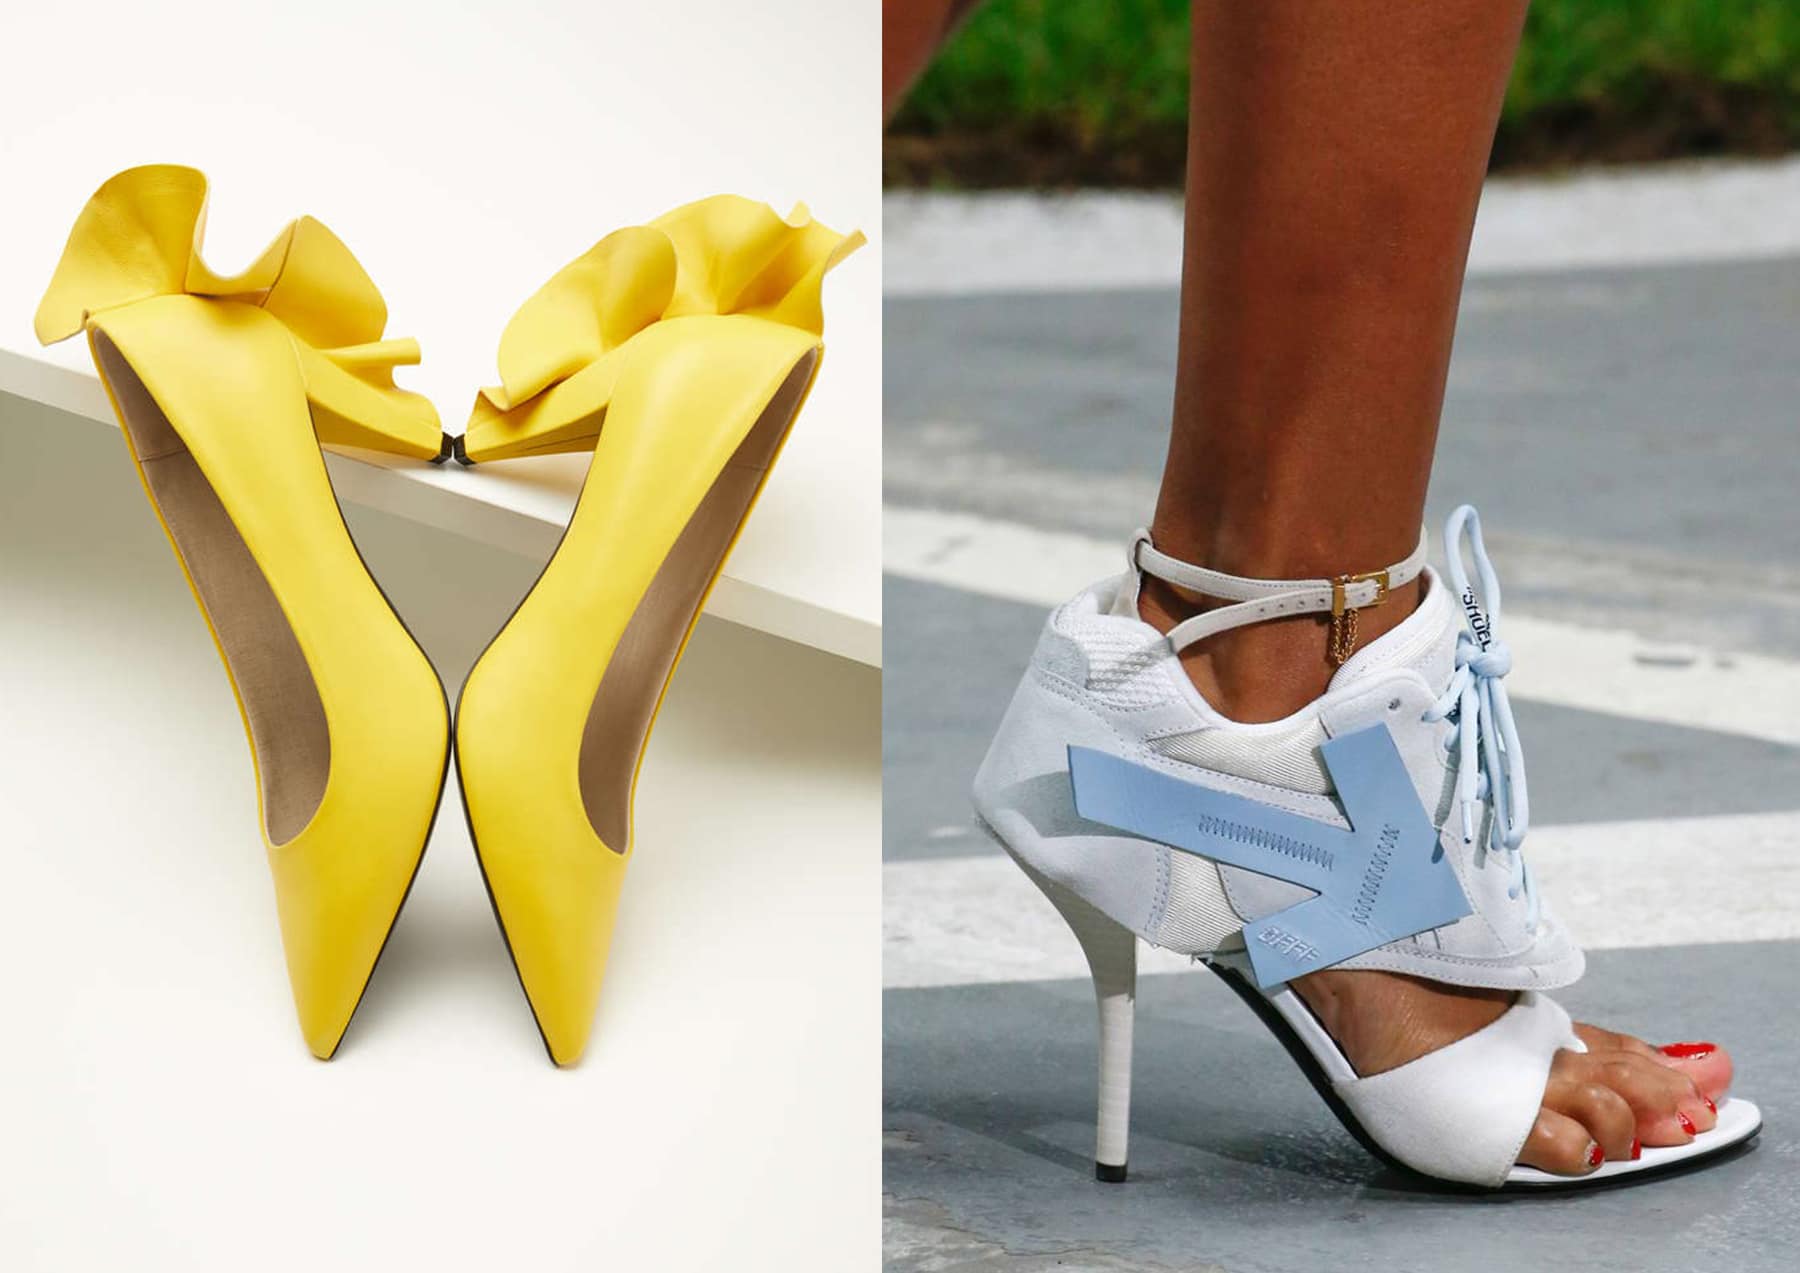 Surrealistic high heel shoe with unique design on Craiyon